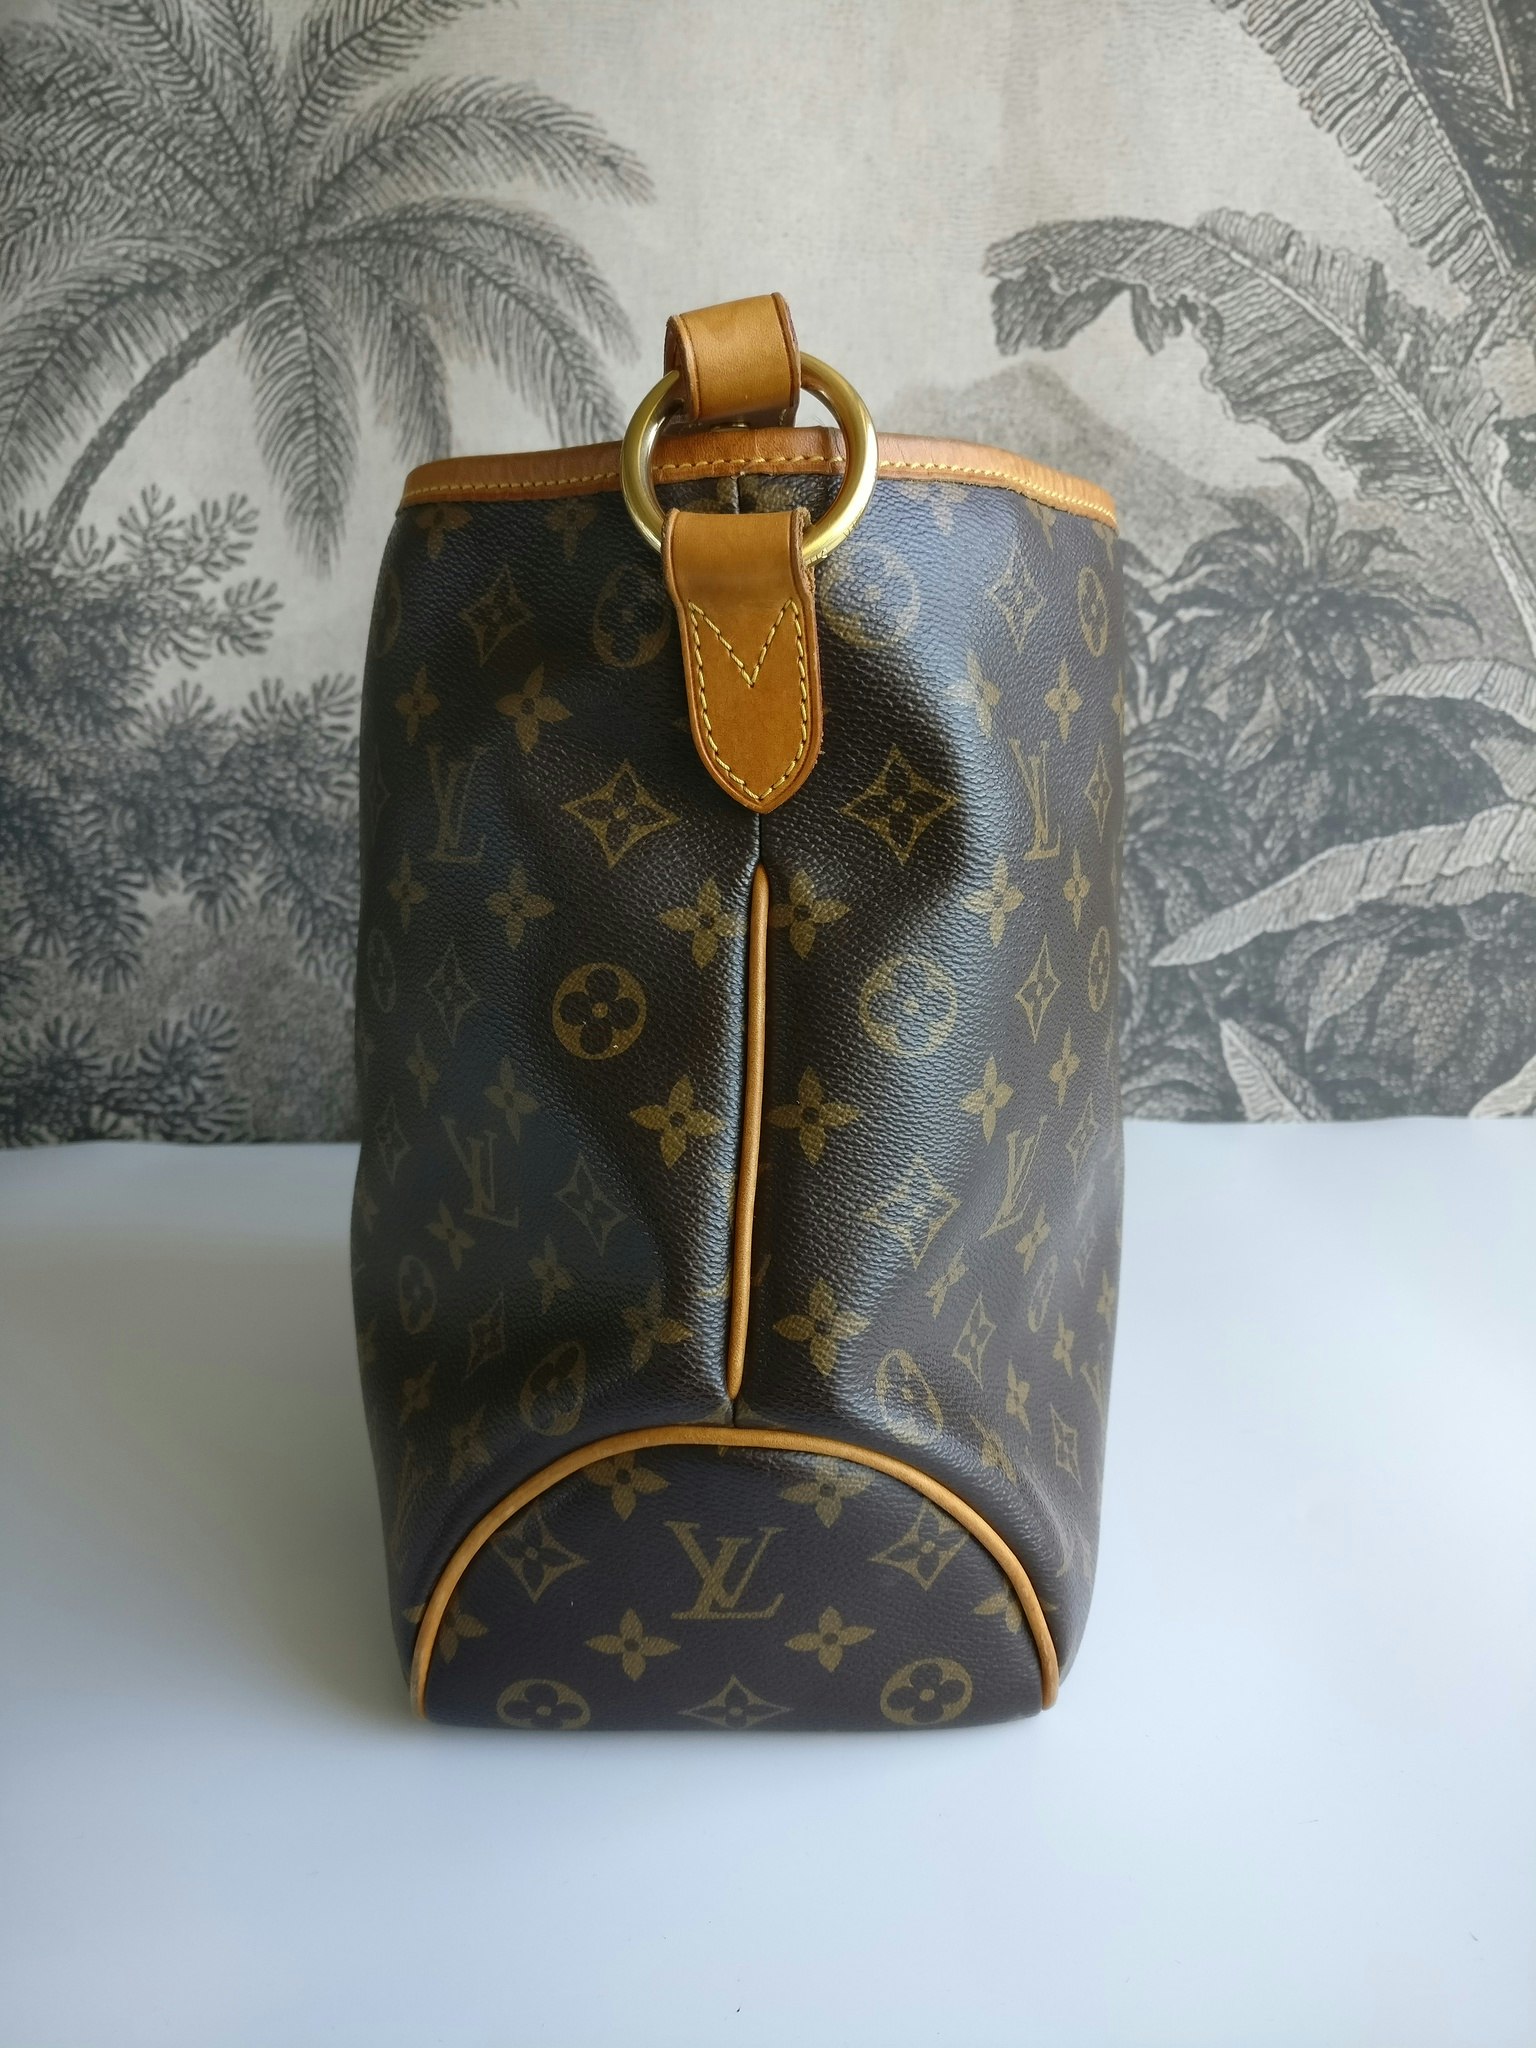 Louis Vuitton Delightful PM - Good or Bag